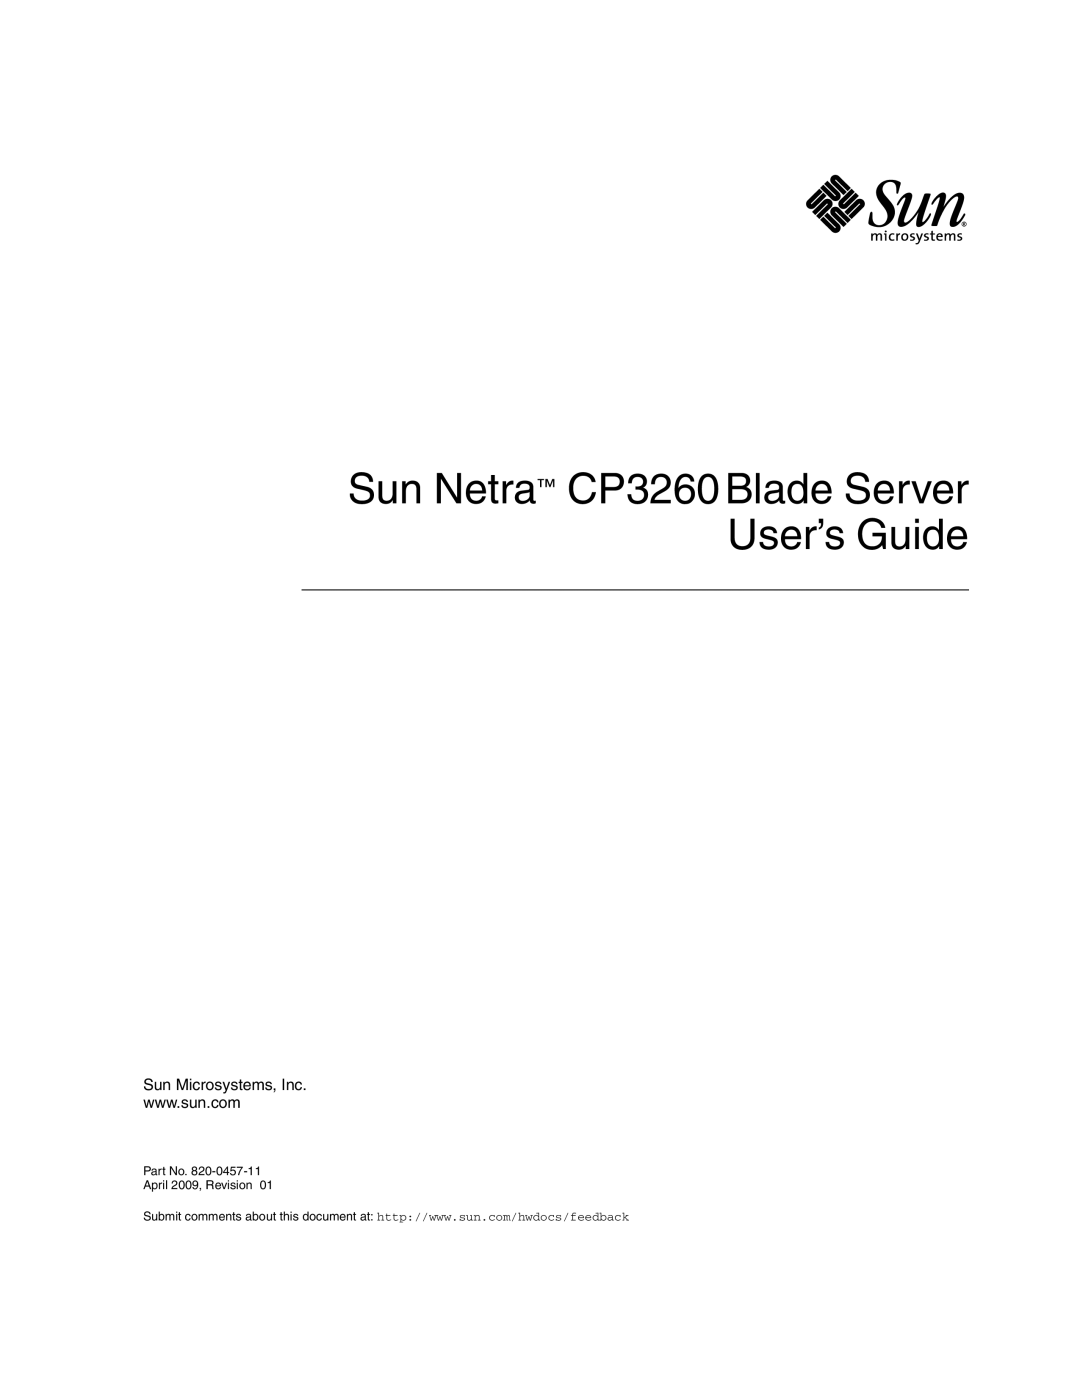 Sun Microsystems manual Sun Netra CP3260 Blade Server User’s Guide, Sun Microsystems, Inc, April 2009, Revision 